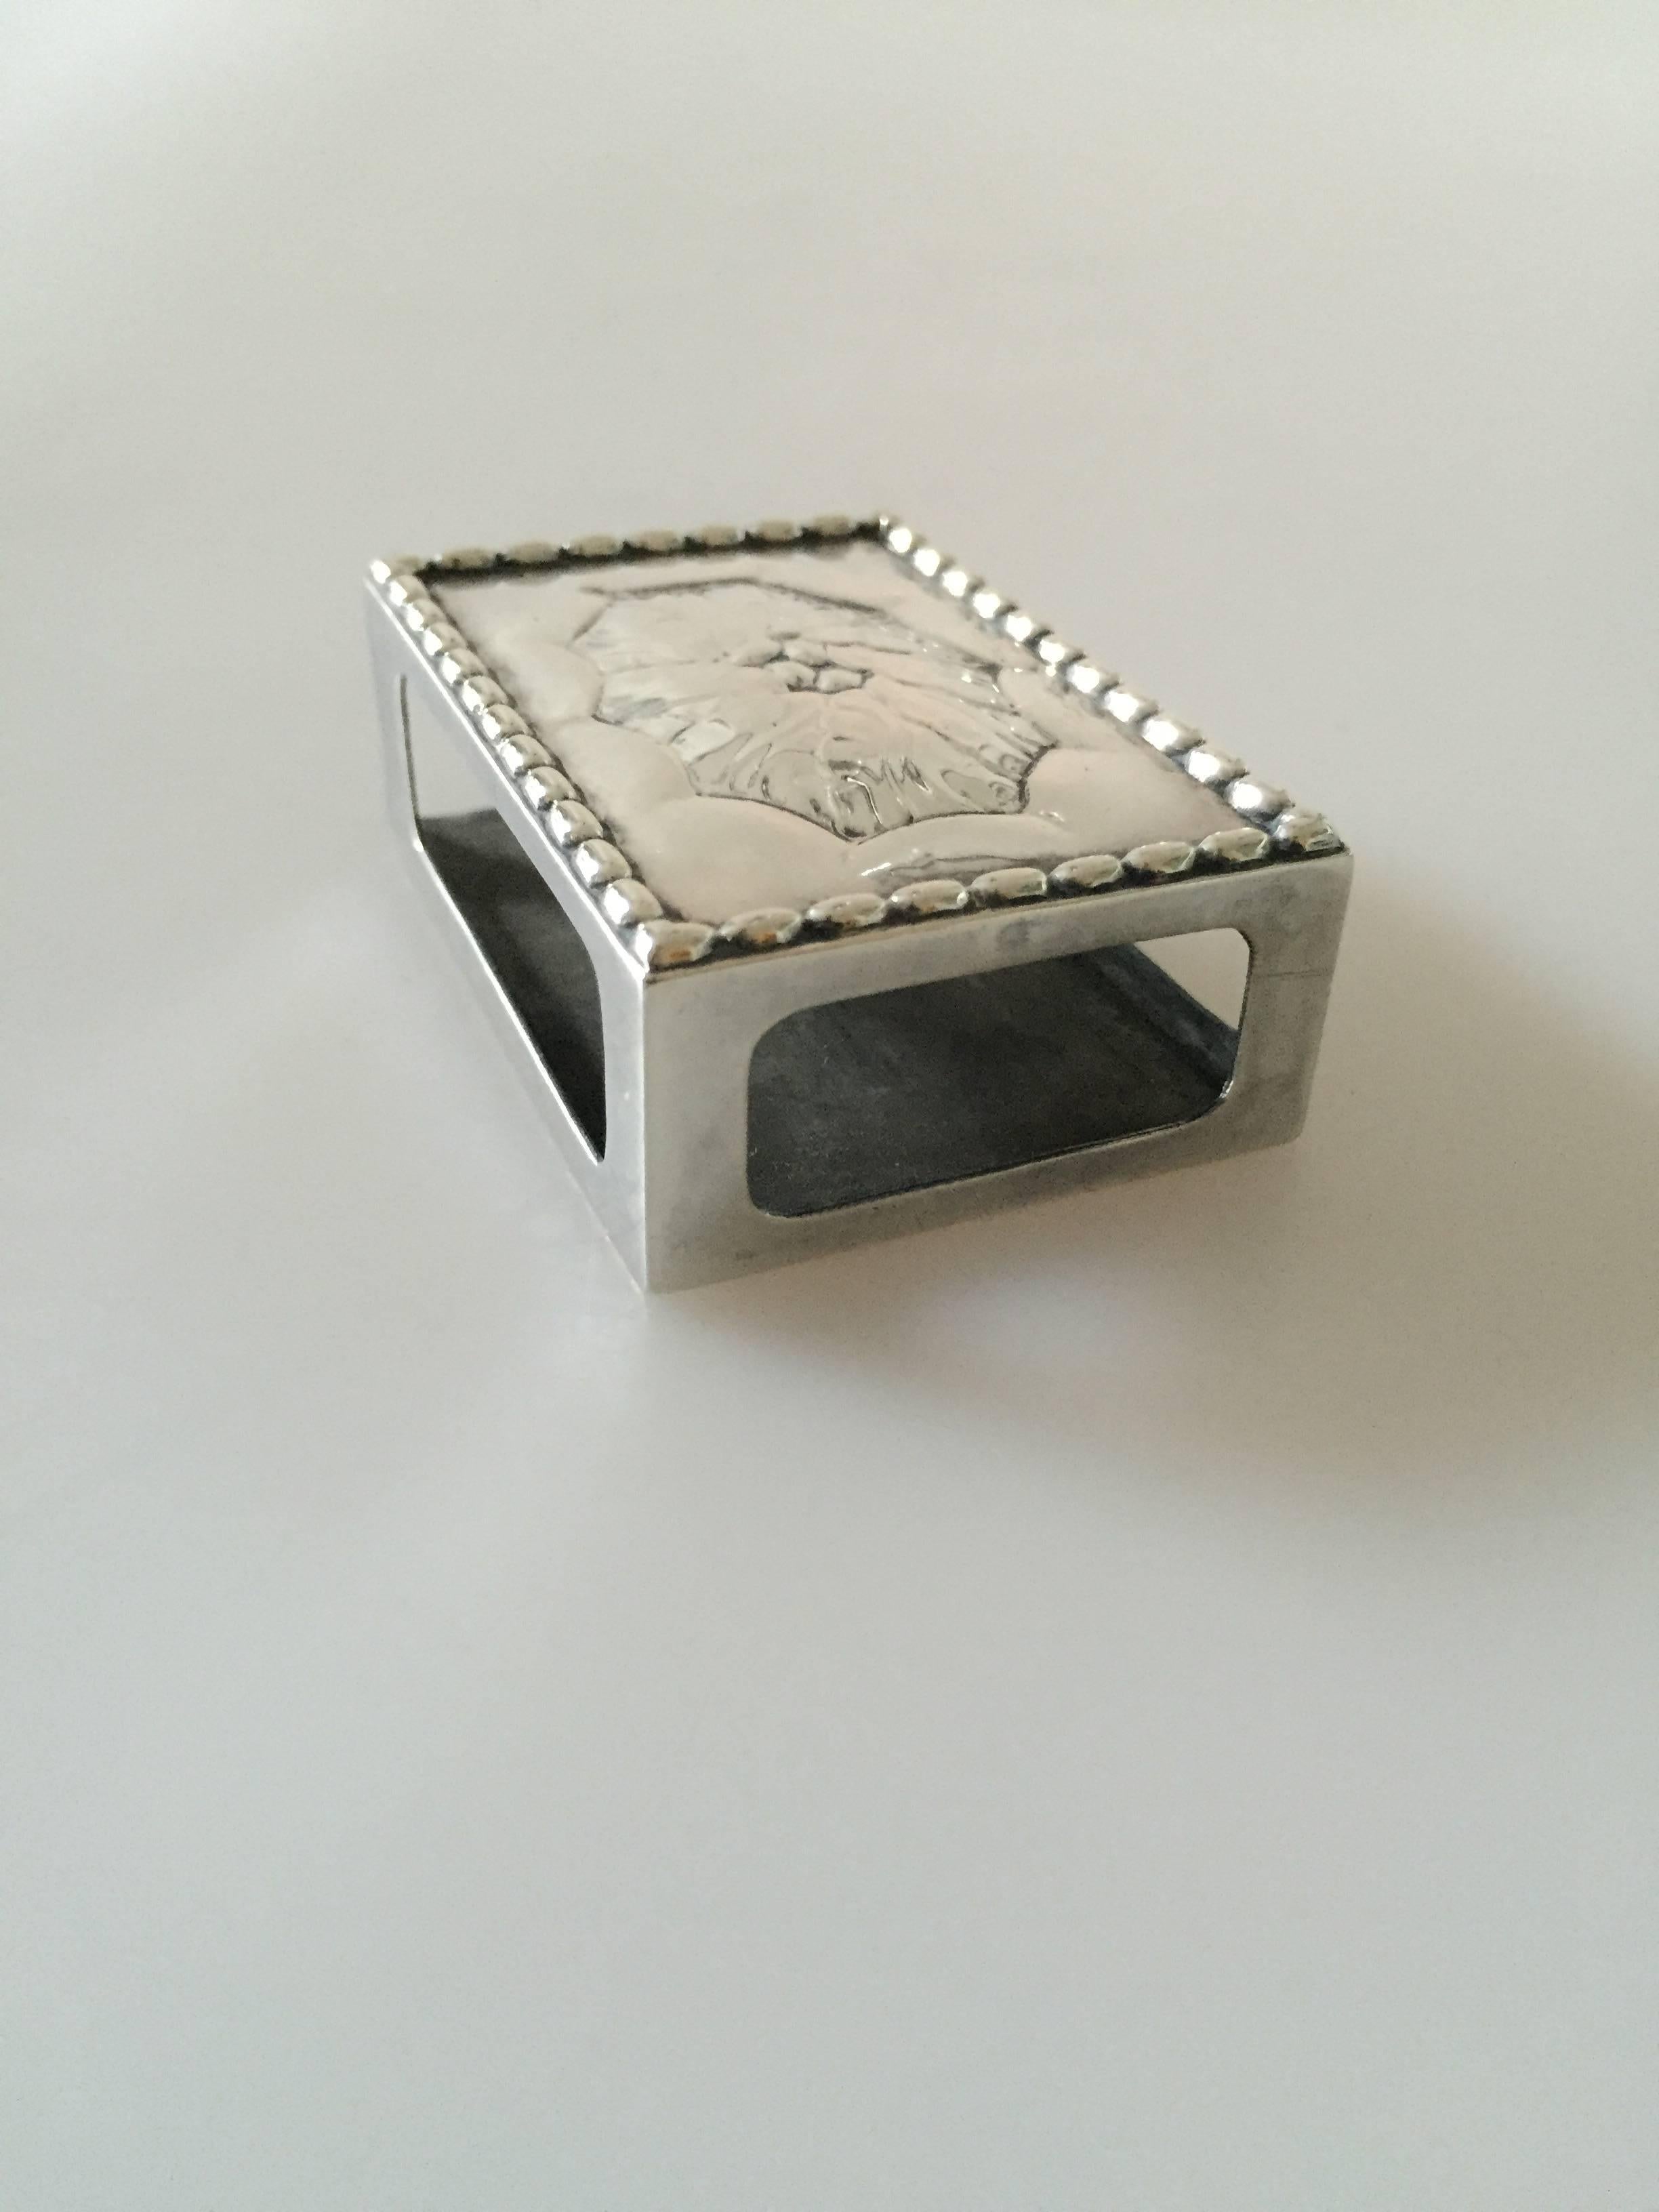 Georg Jensen sterling silver matchbox holder #83C. With old marks.

Measures 5.5 cm x 3.9 cm x 2 cm.